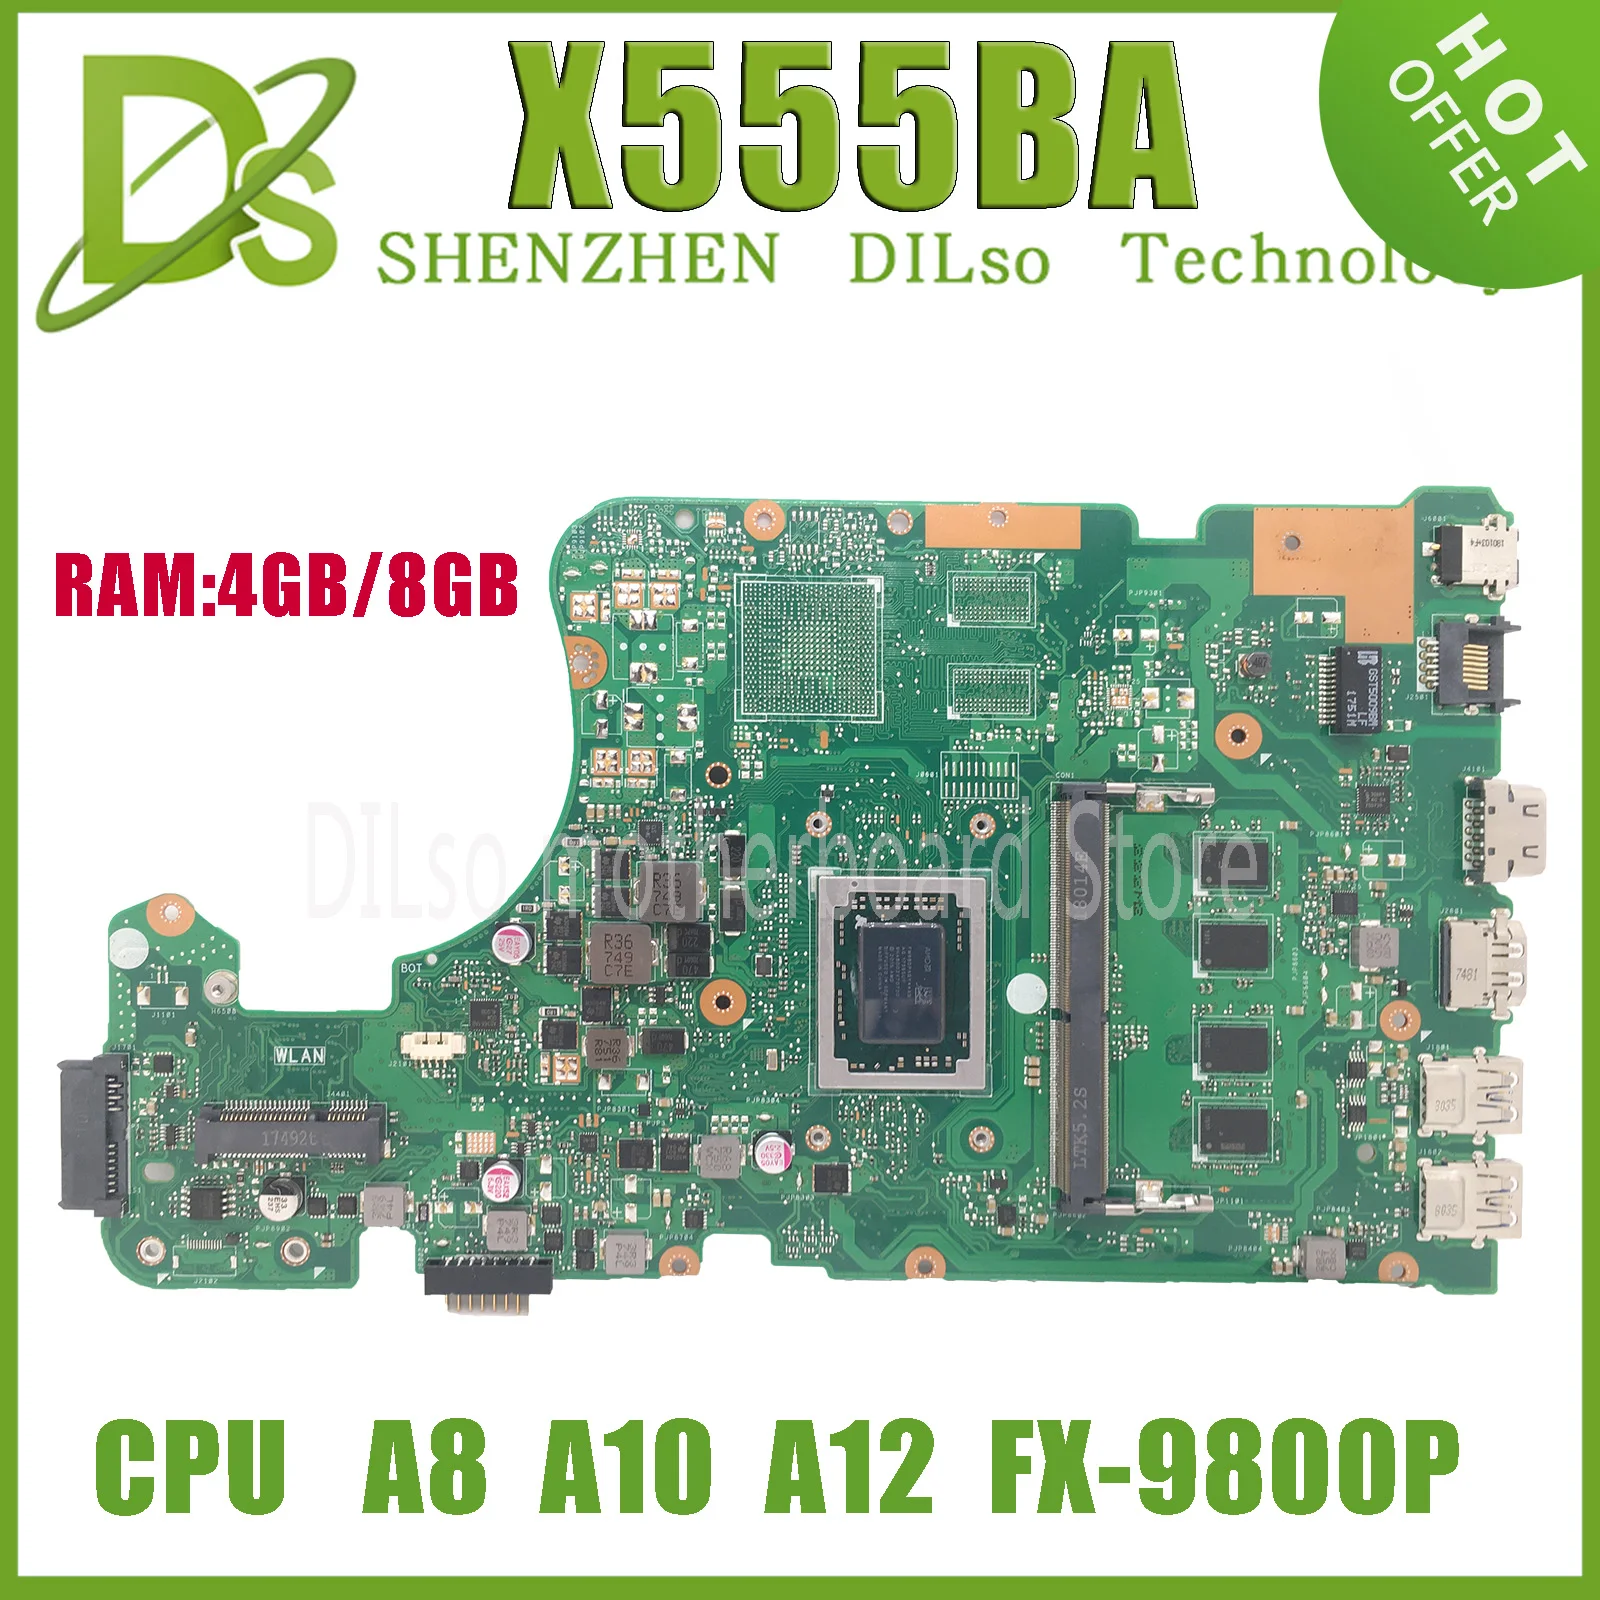 Enlarge X555QG Laptop Motherboard For Asus X555QA X555Q X555B X555BP K555B X555BA Mainboard A6 A9 A10 A12 FX-9800P CPU 4G/8G-RAM